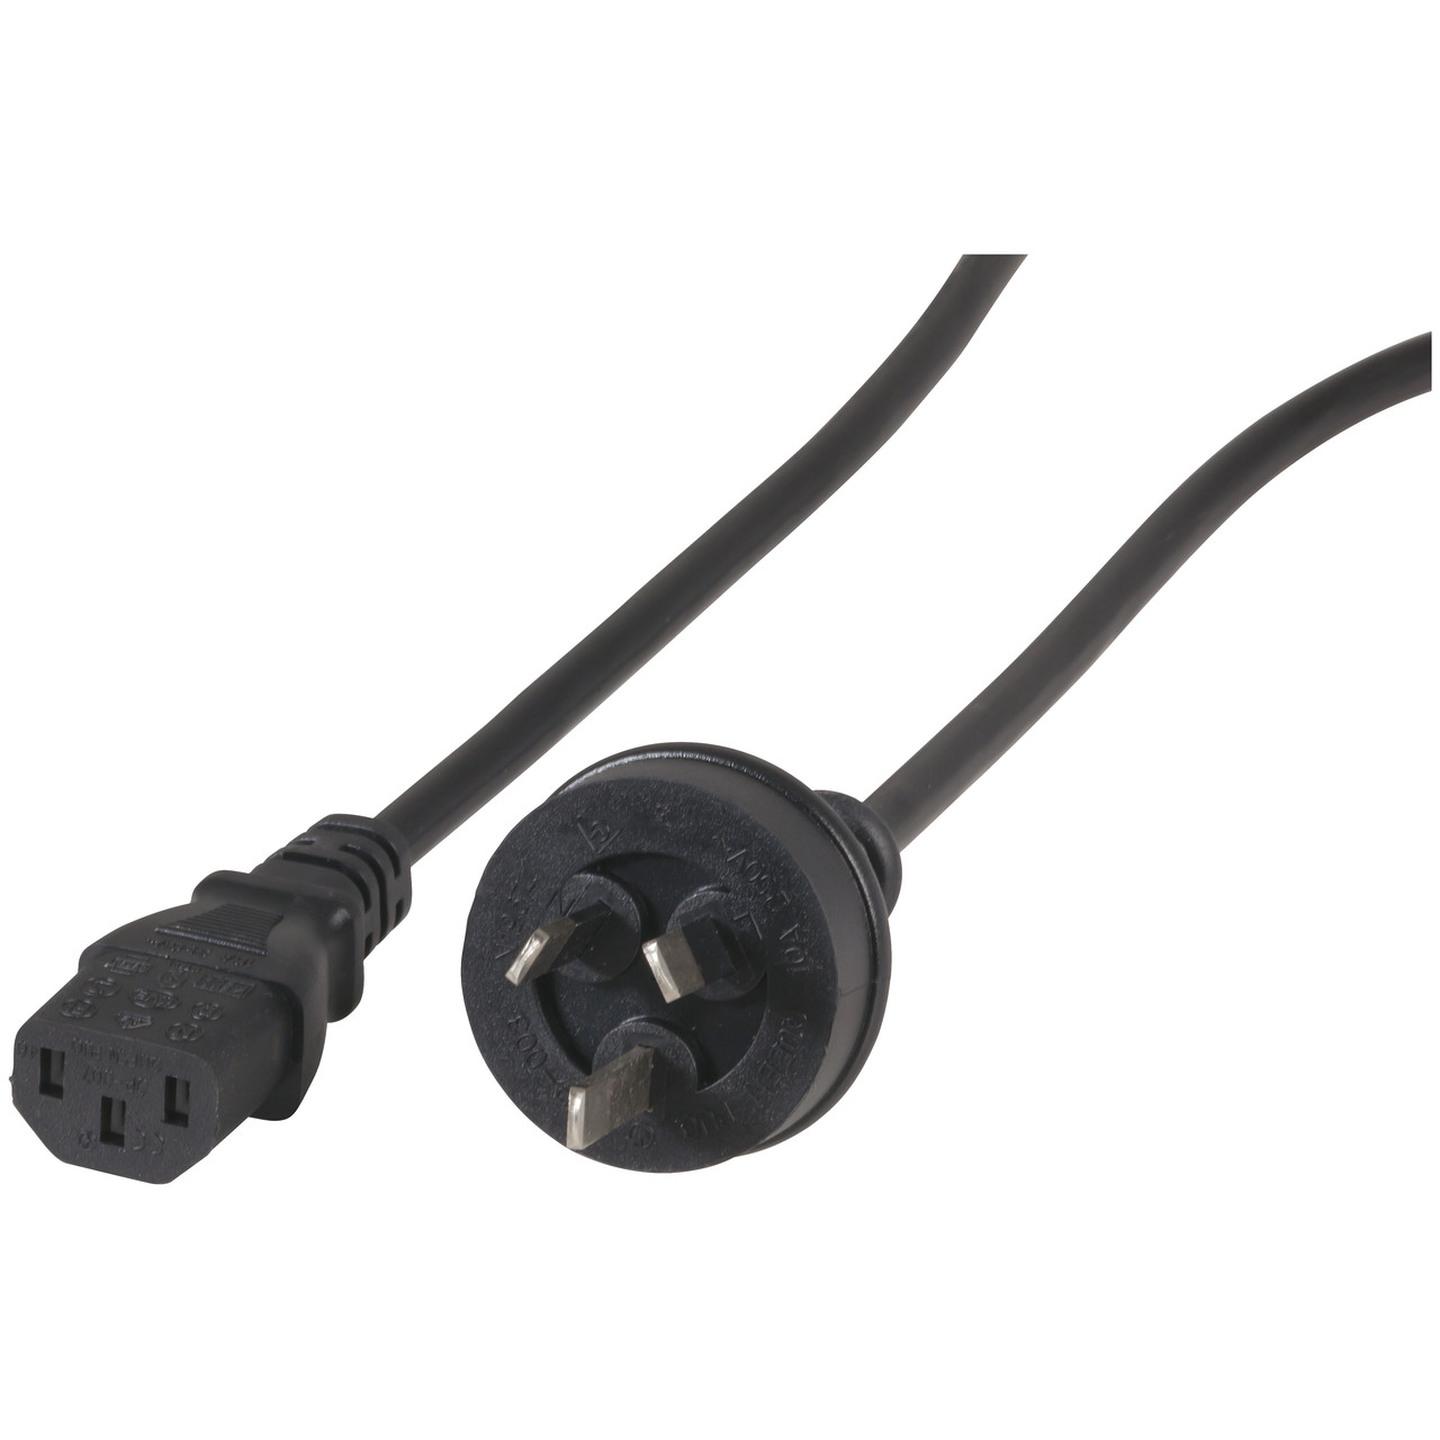 3-Outlet IEC Mains Cable